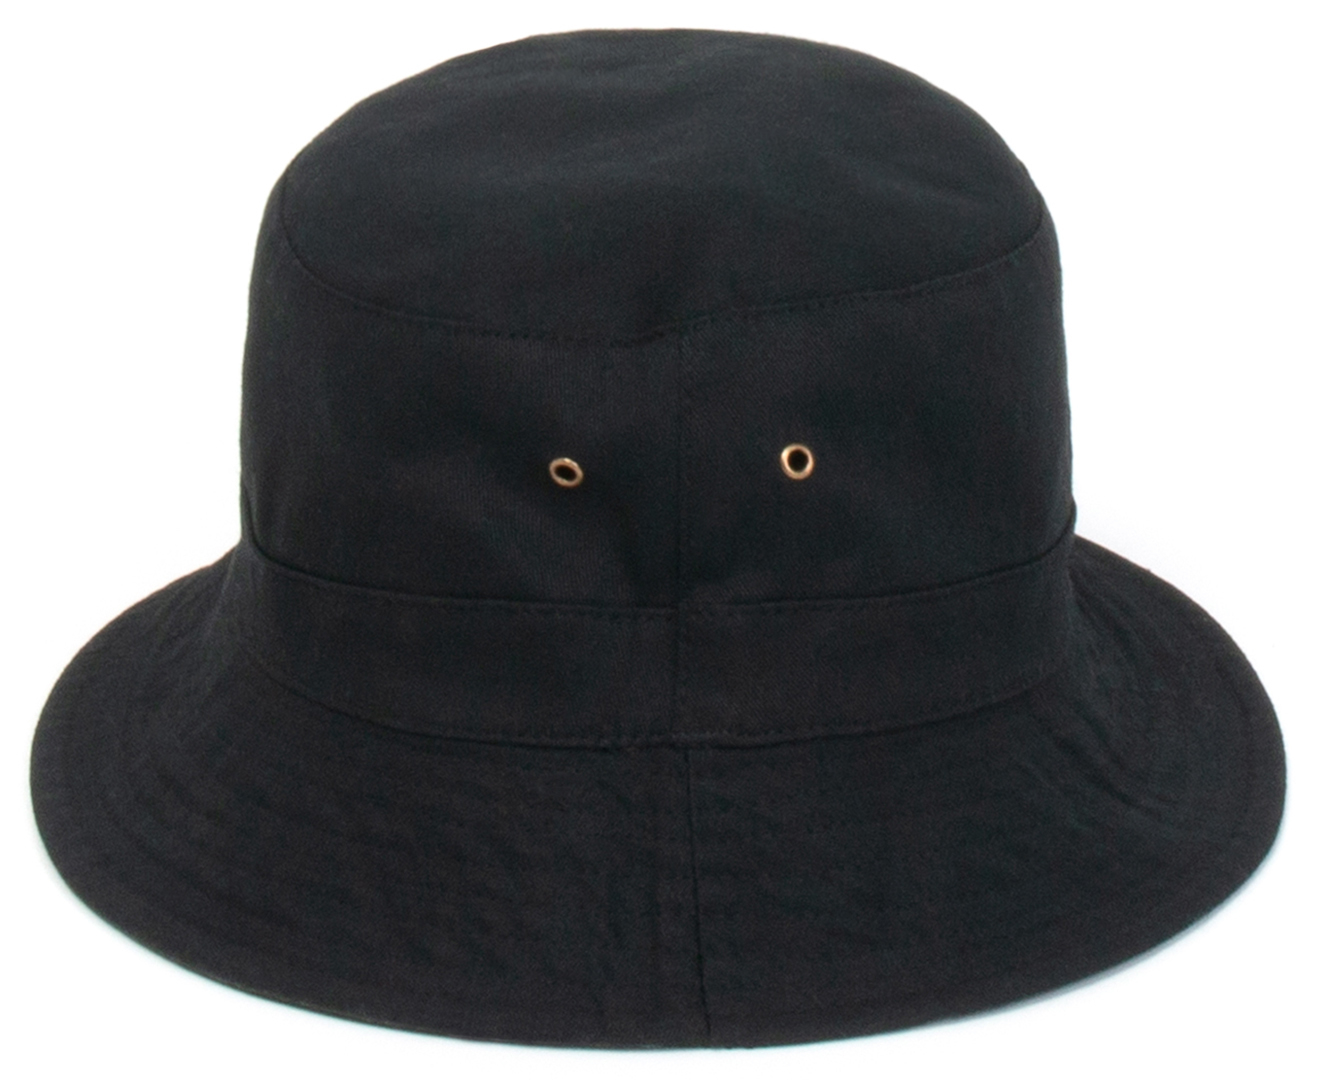 Brockman Supply Co. Reversible Bucket Hat - Black | Catch.com.au